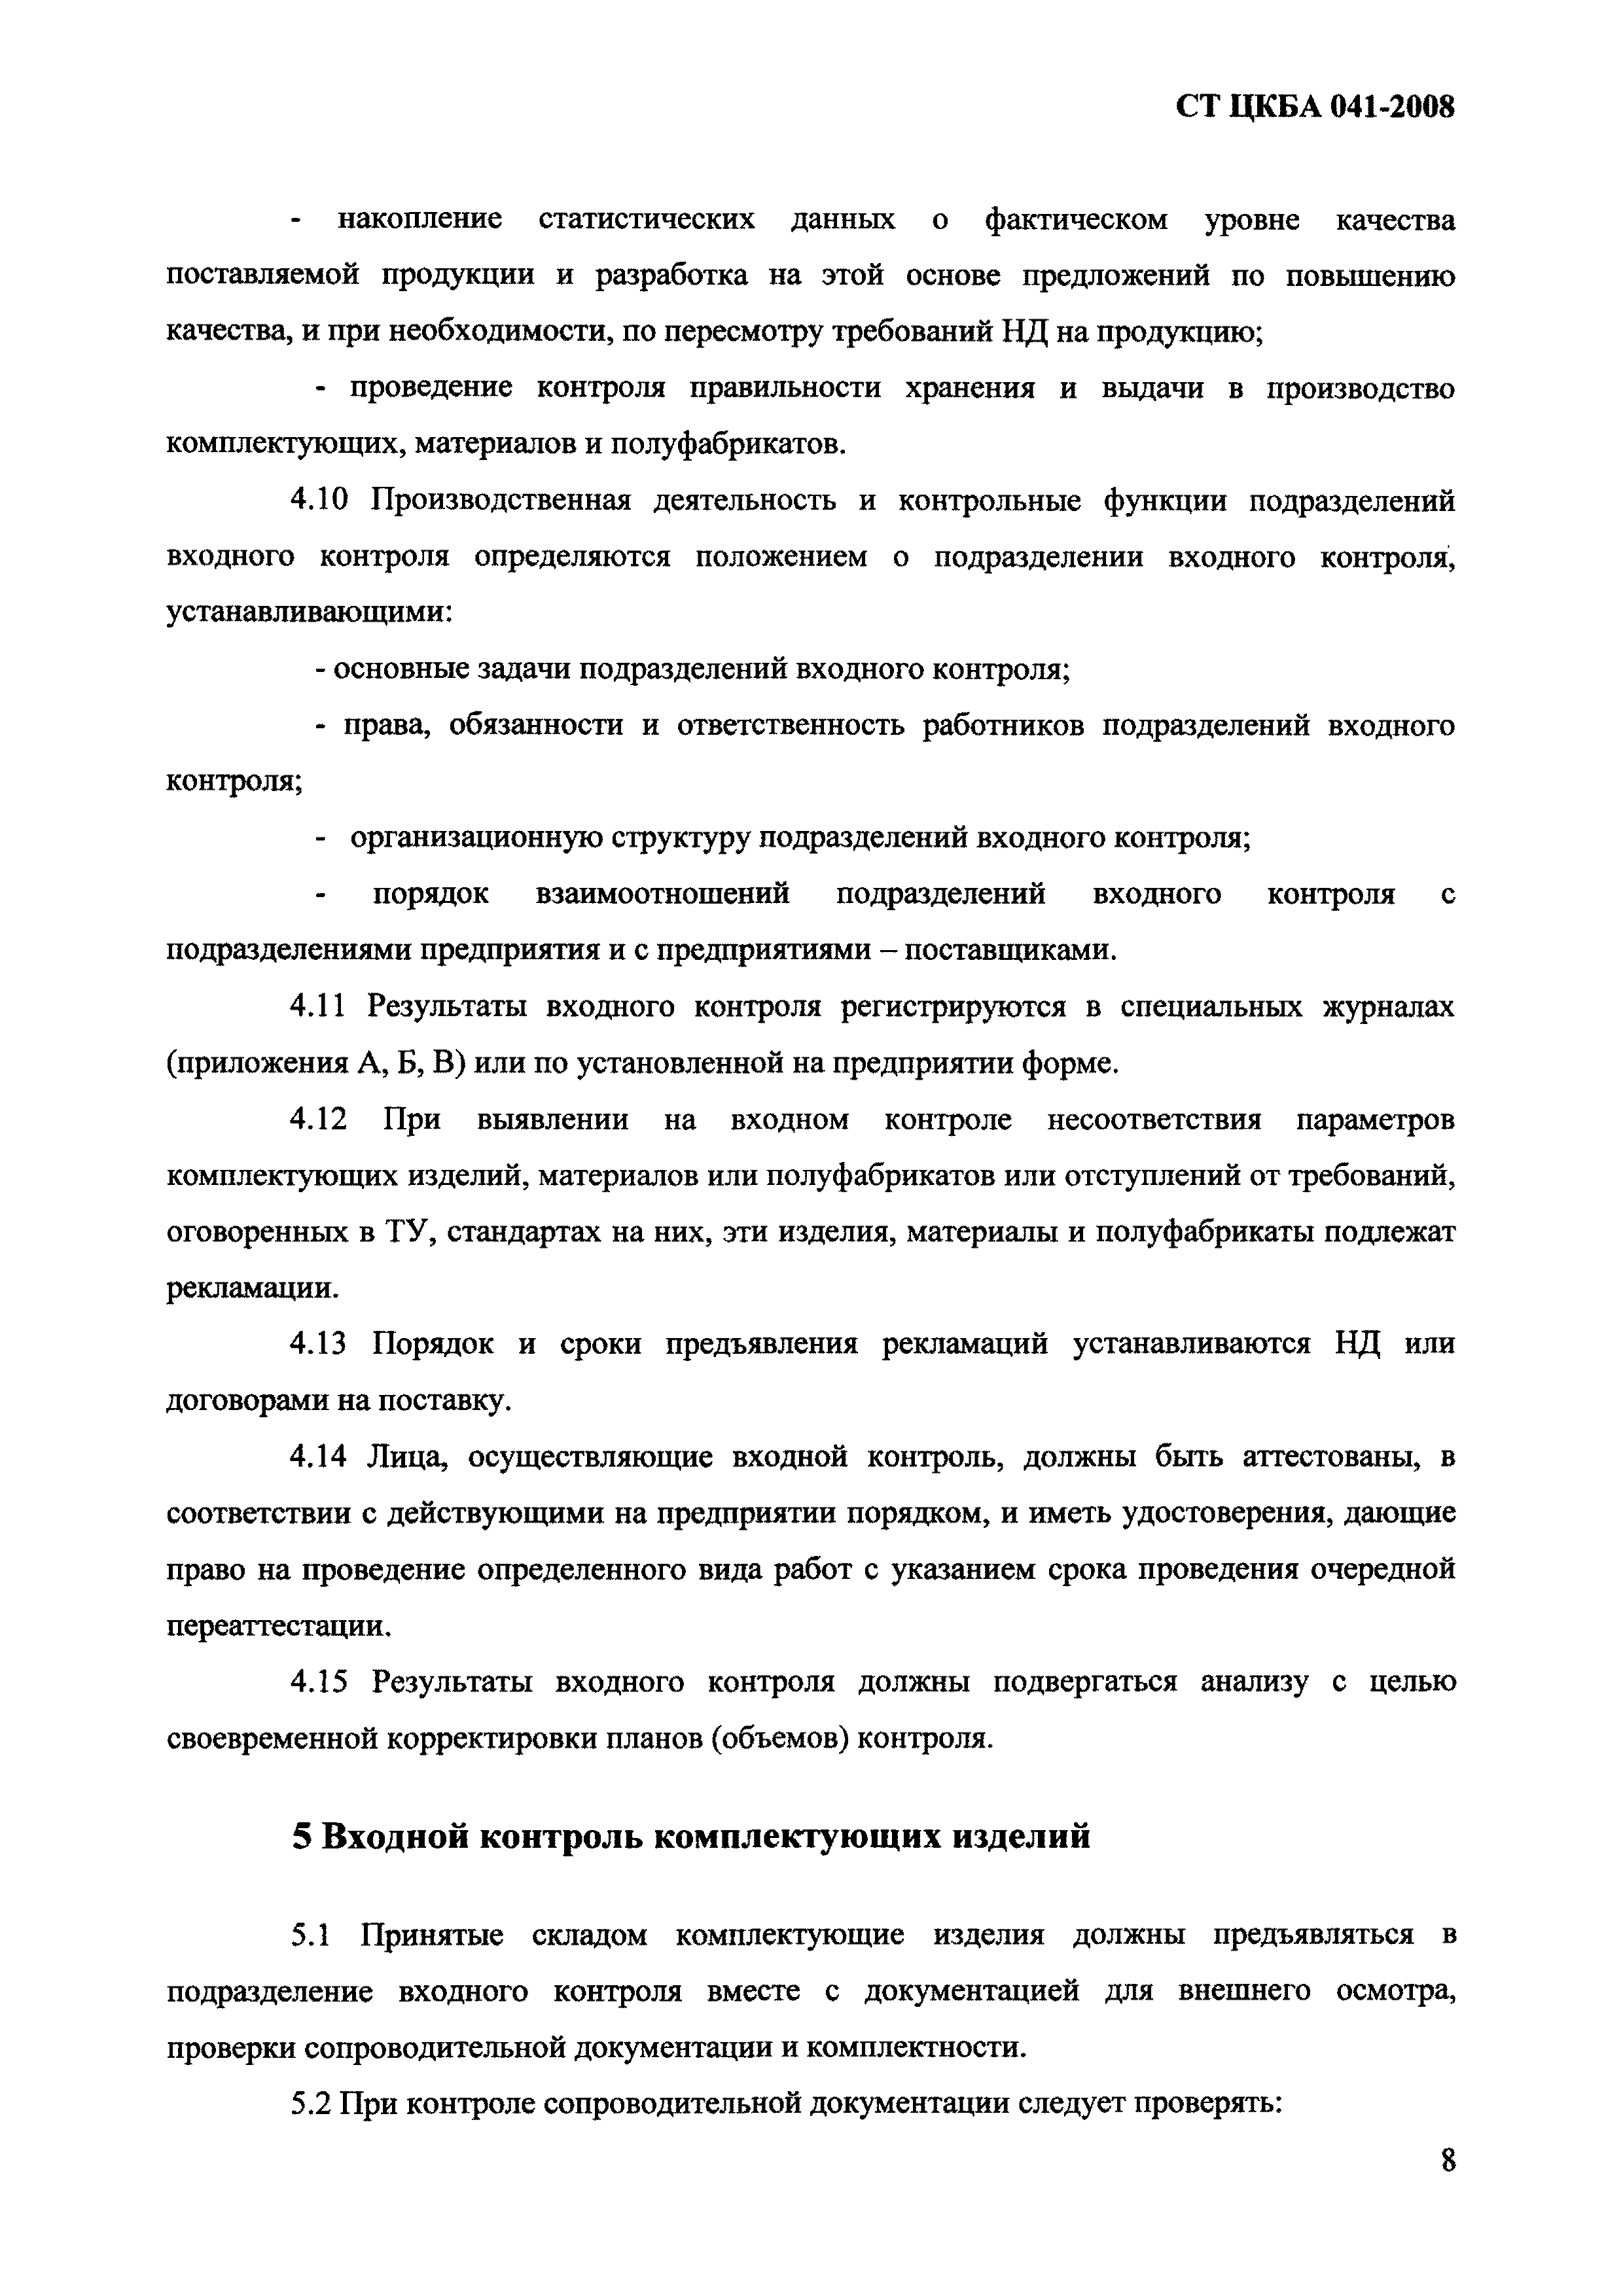 СТ ЦКБА 041-2008